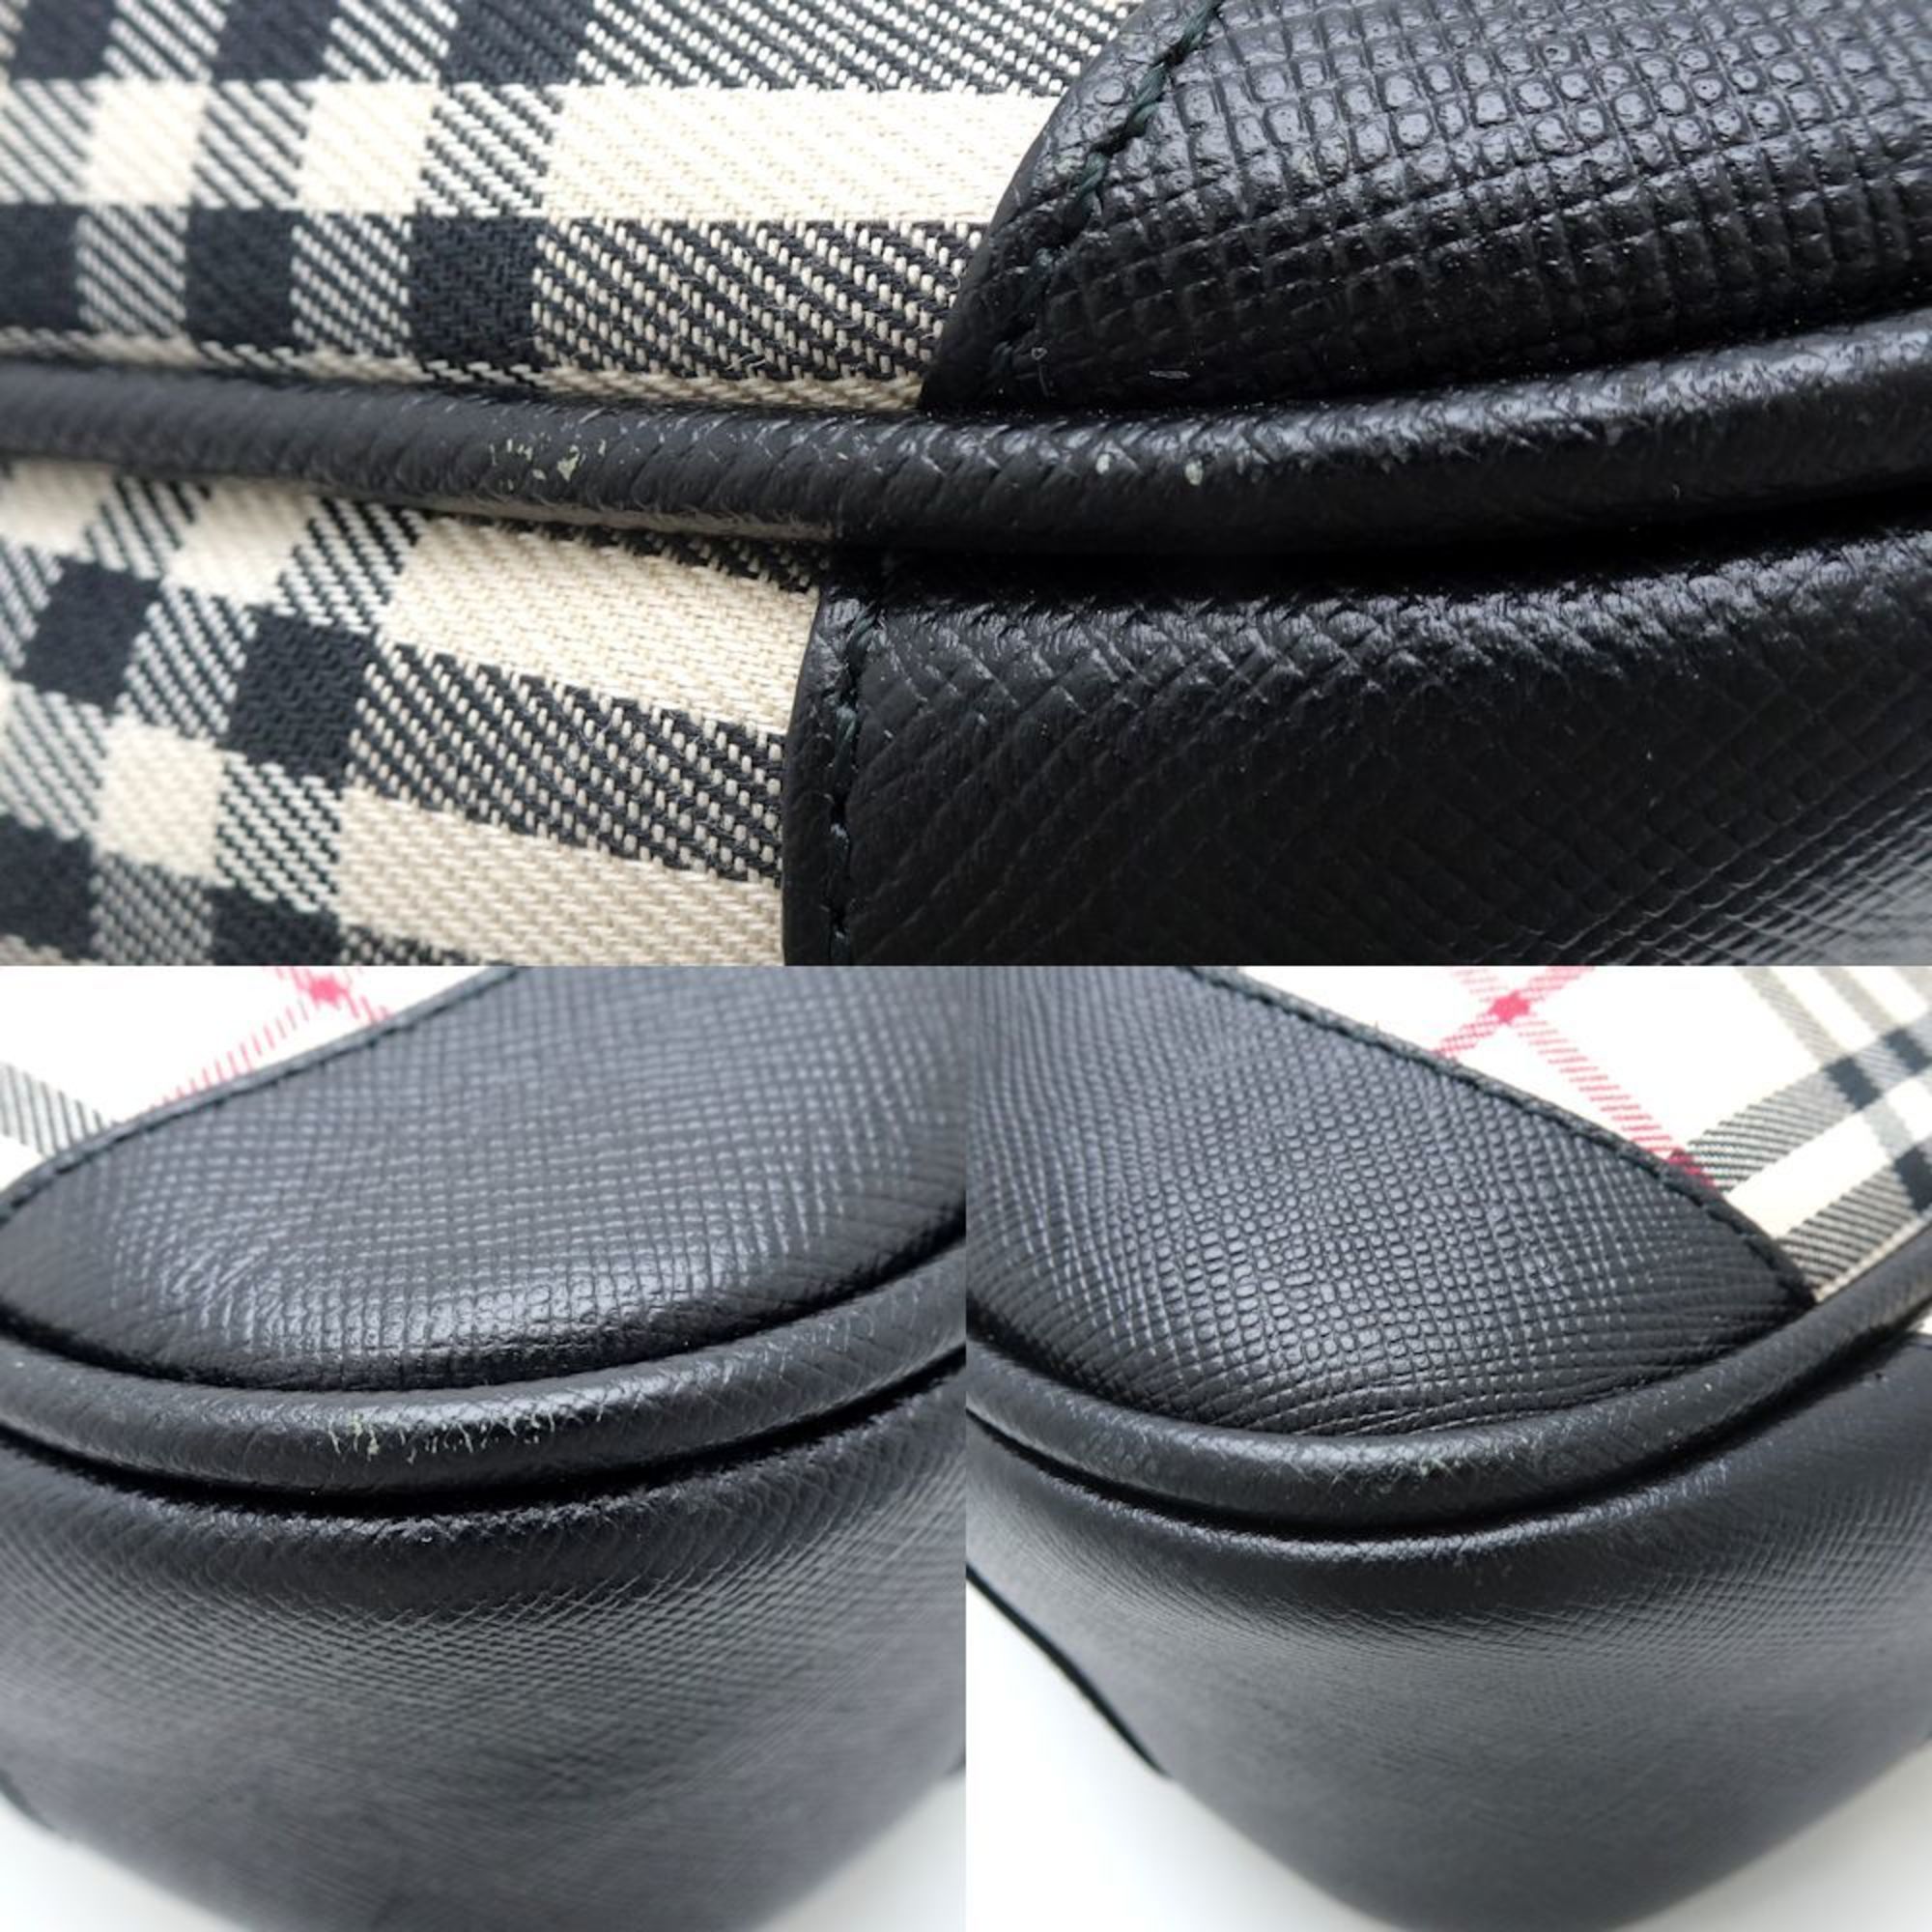 BURBERRY Shoulder bag Nova check canvas x leather beige black 351289